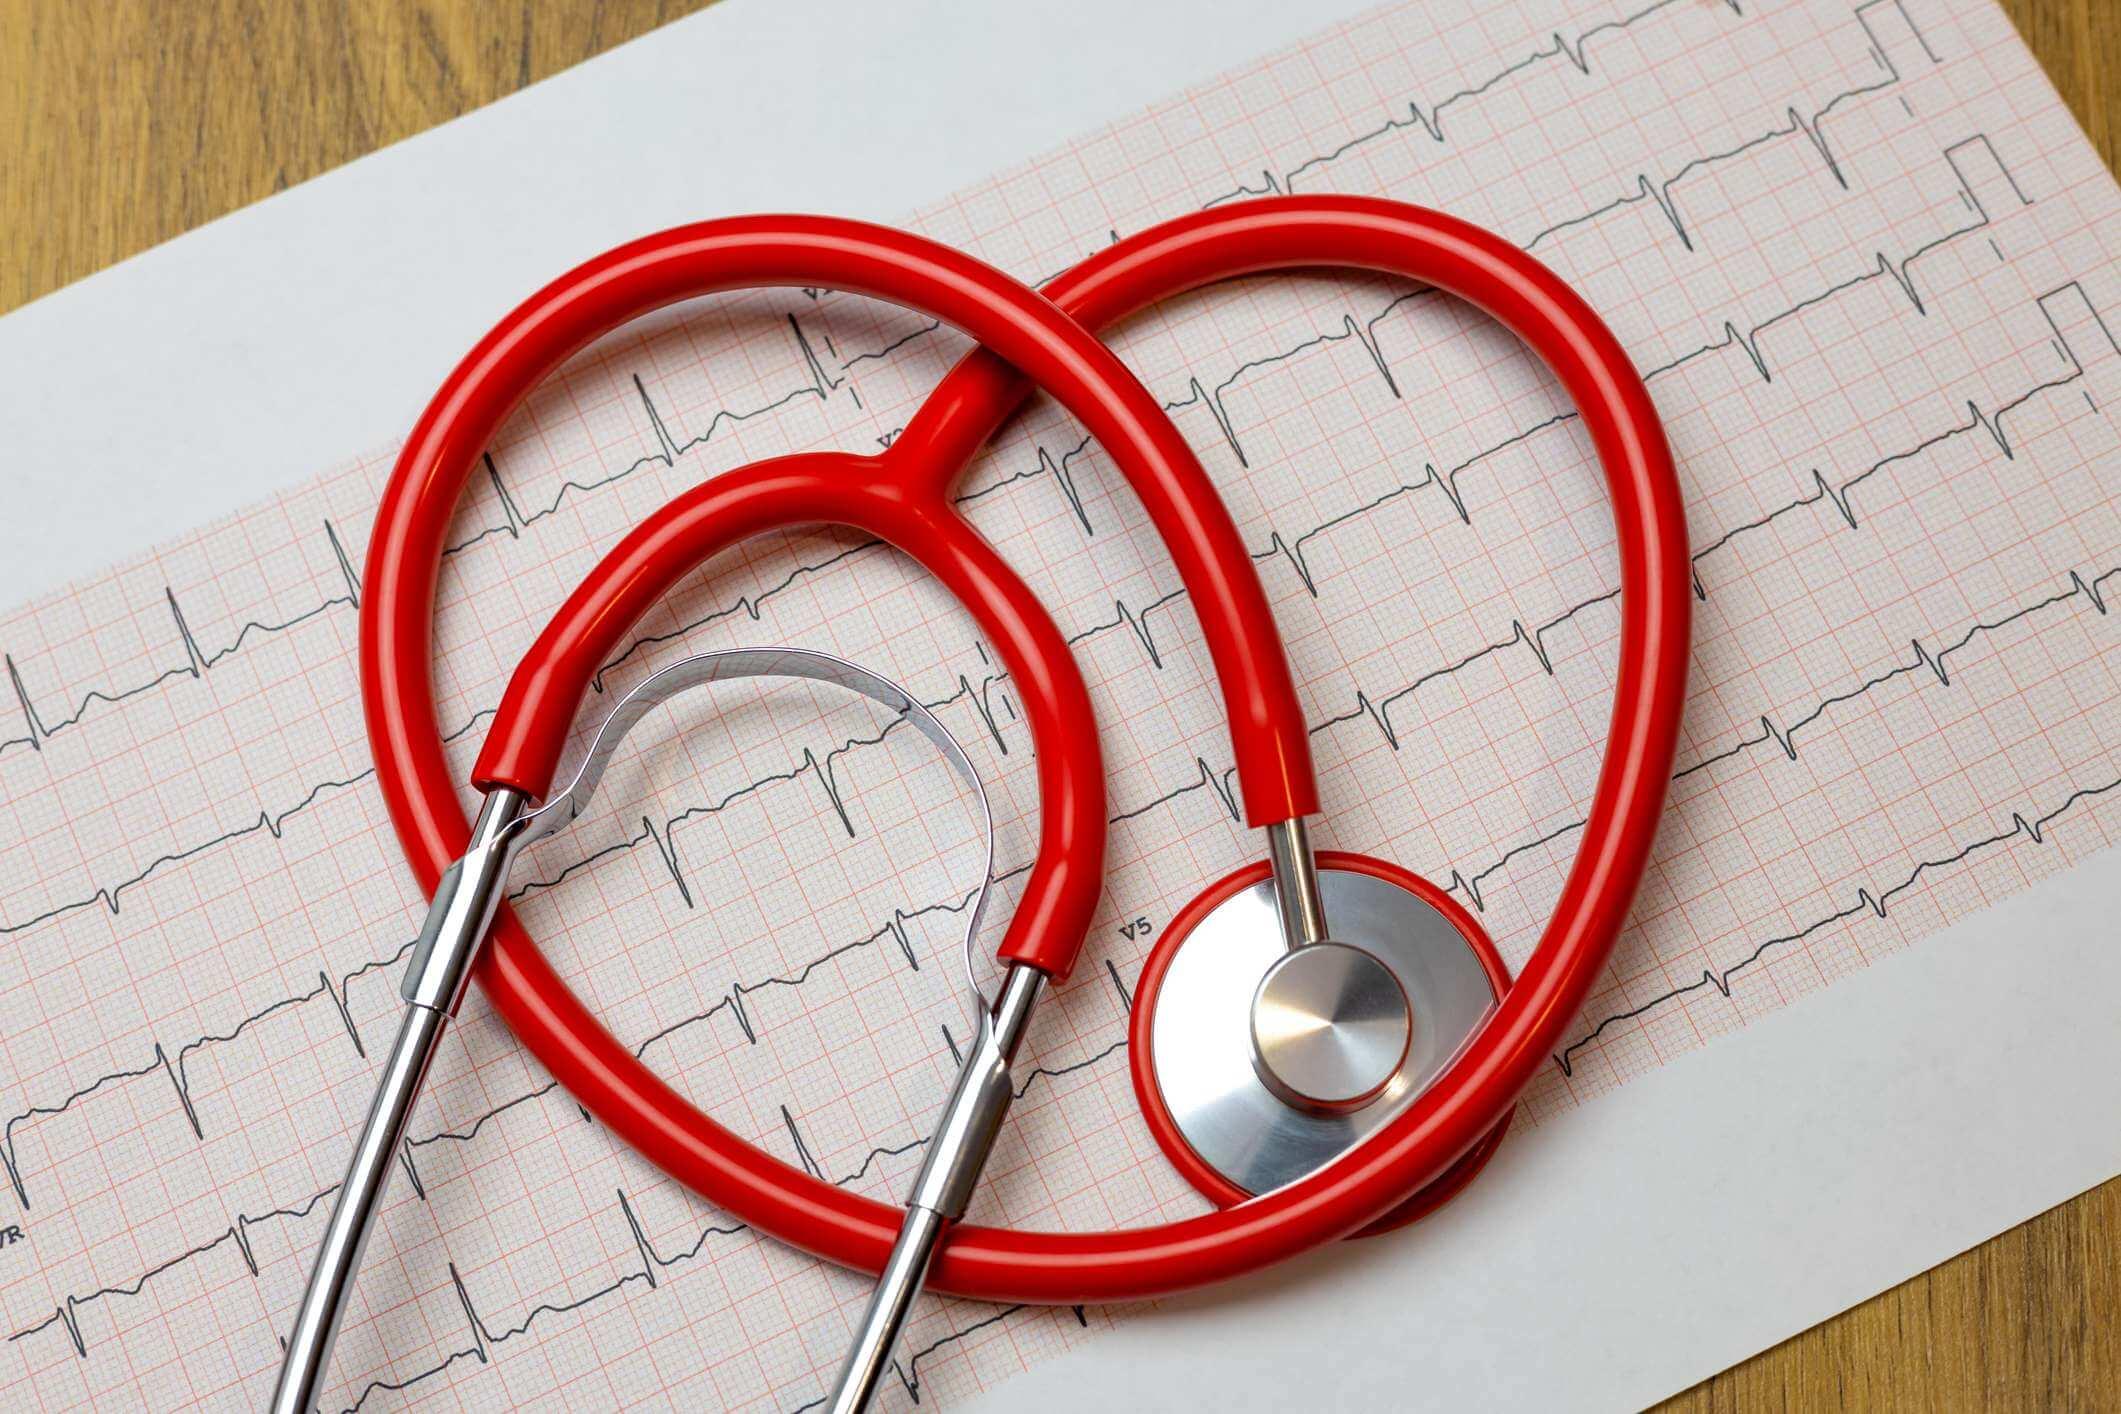 Nahaufnahme des roten Herzstethoskops auf Papier des Elektrokardiogramms (EKG).